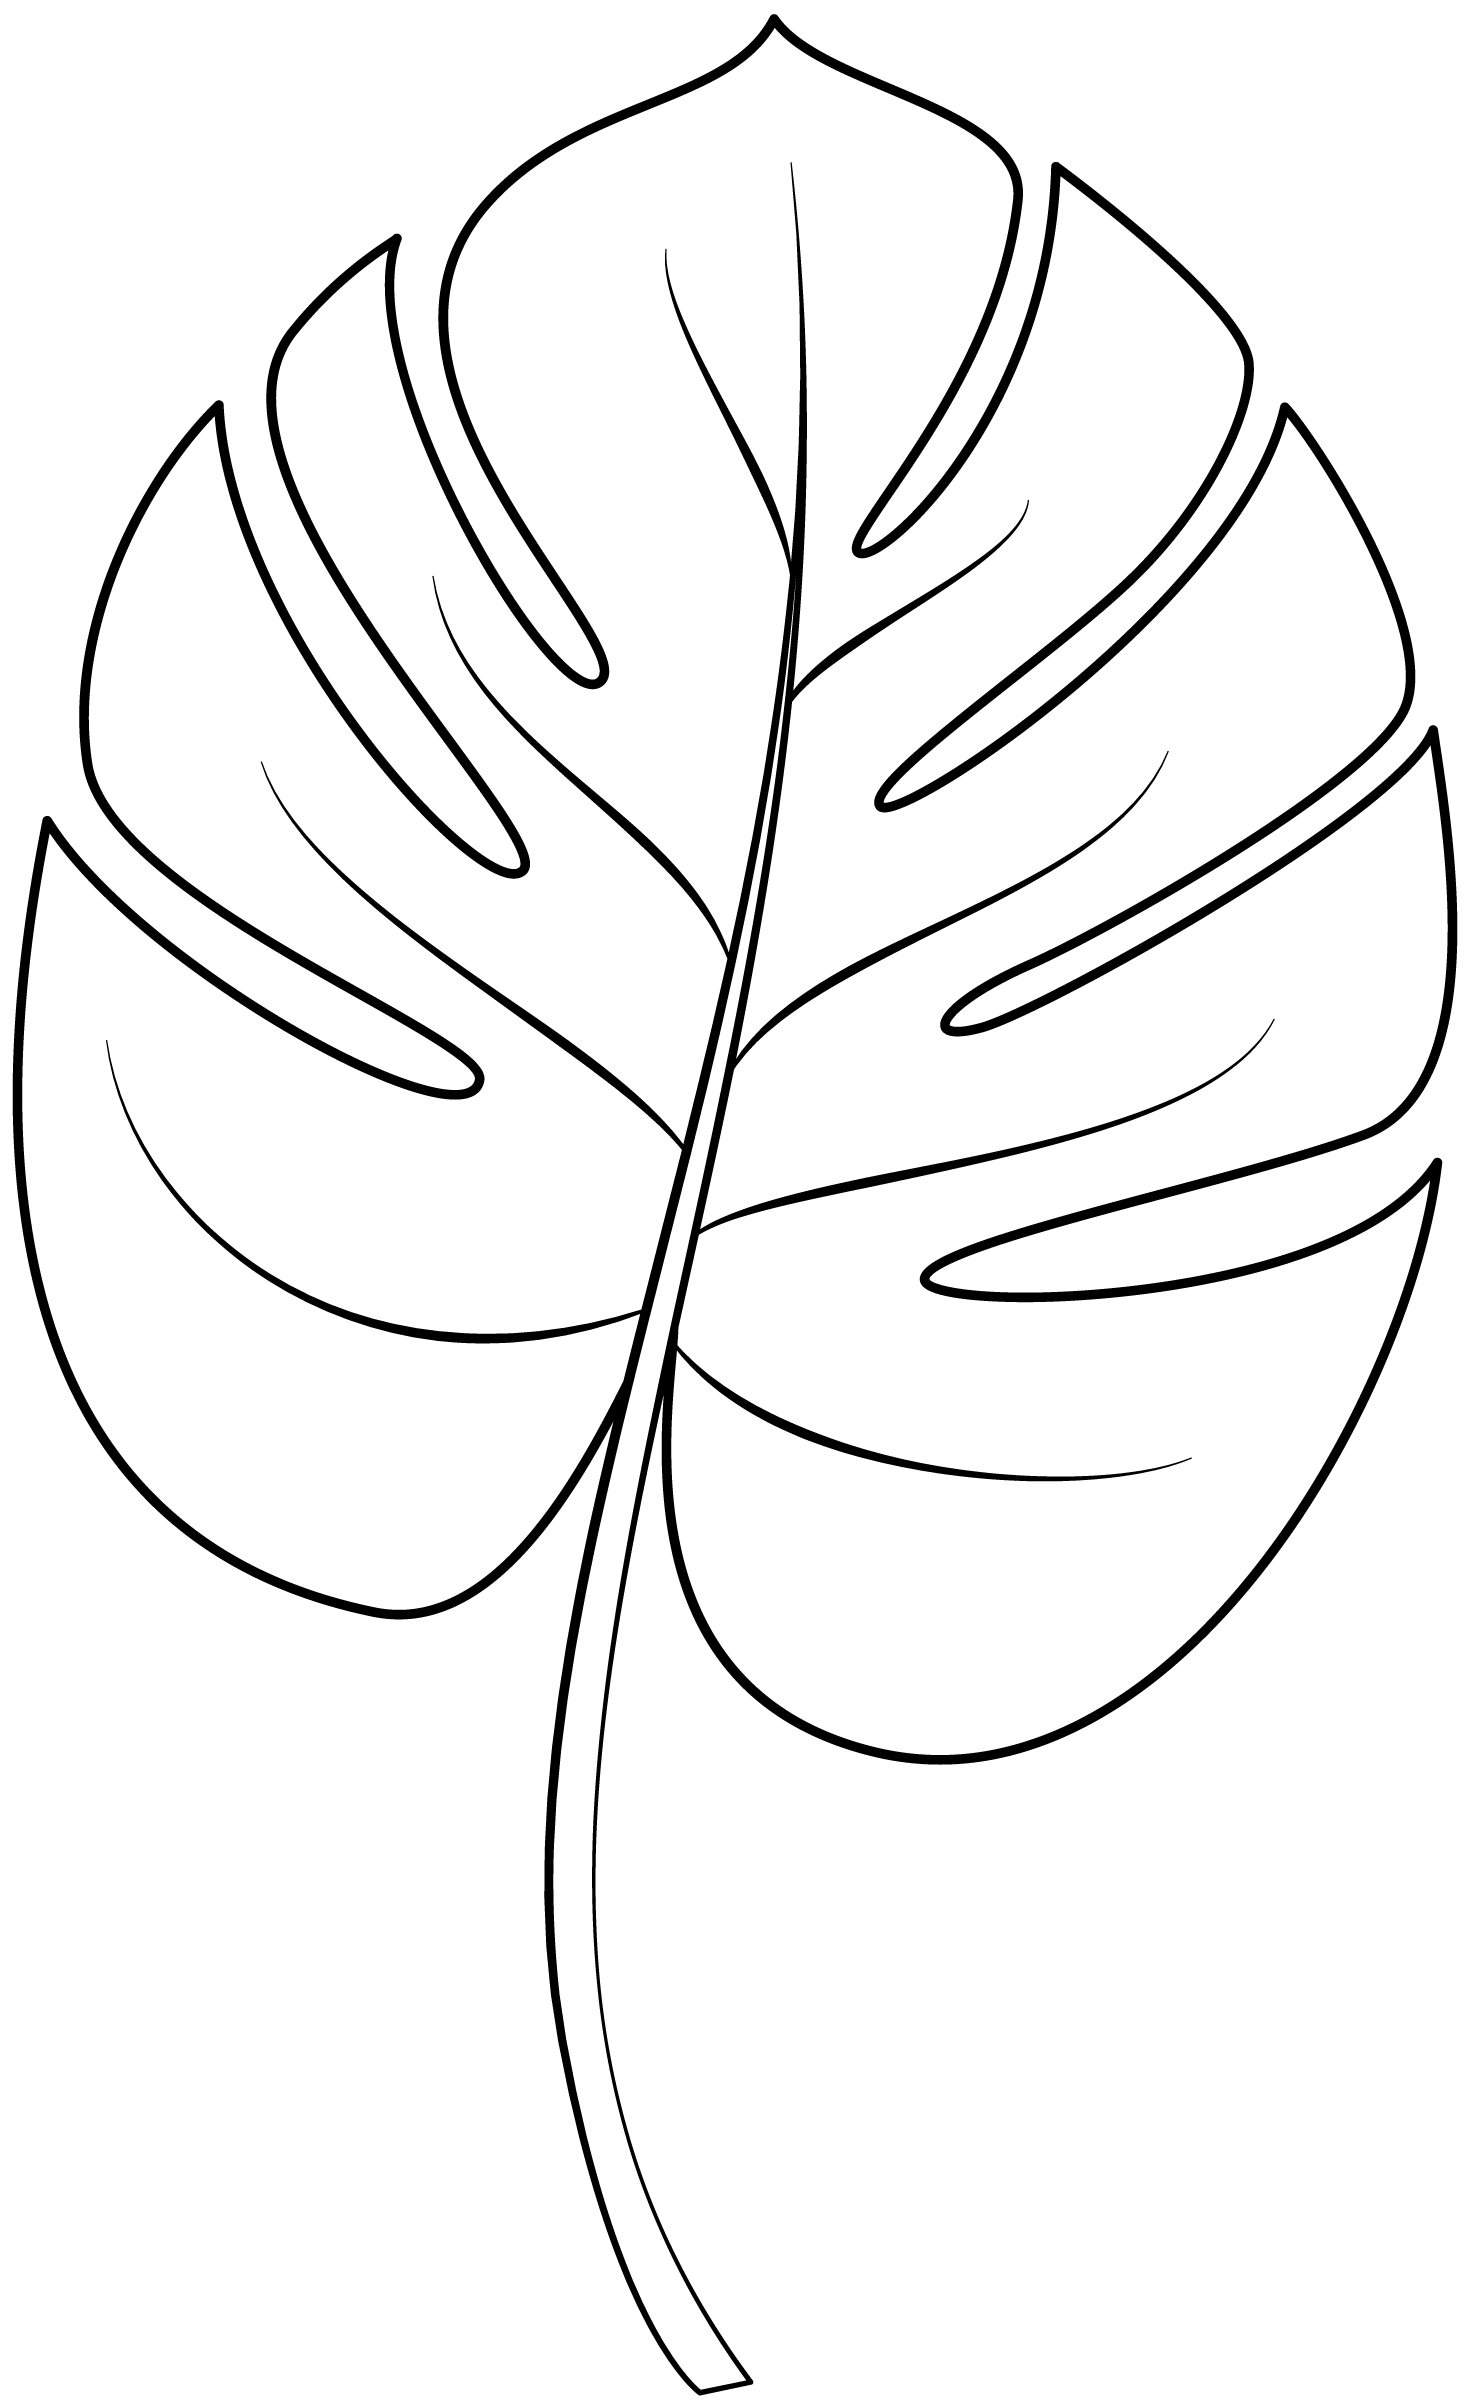 Single Leaf painting page - SheetalColor.com